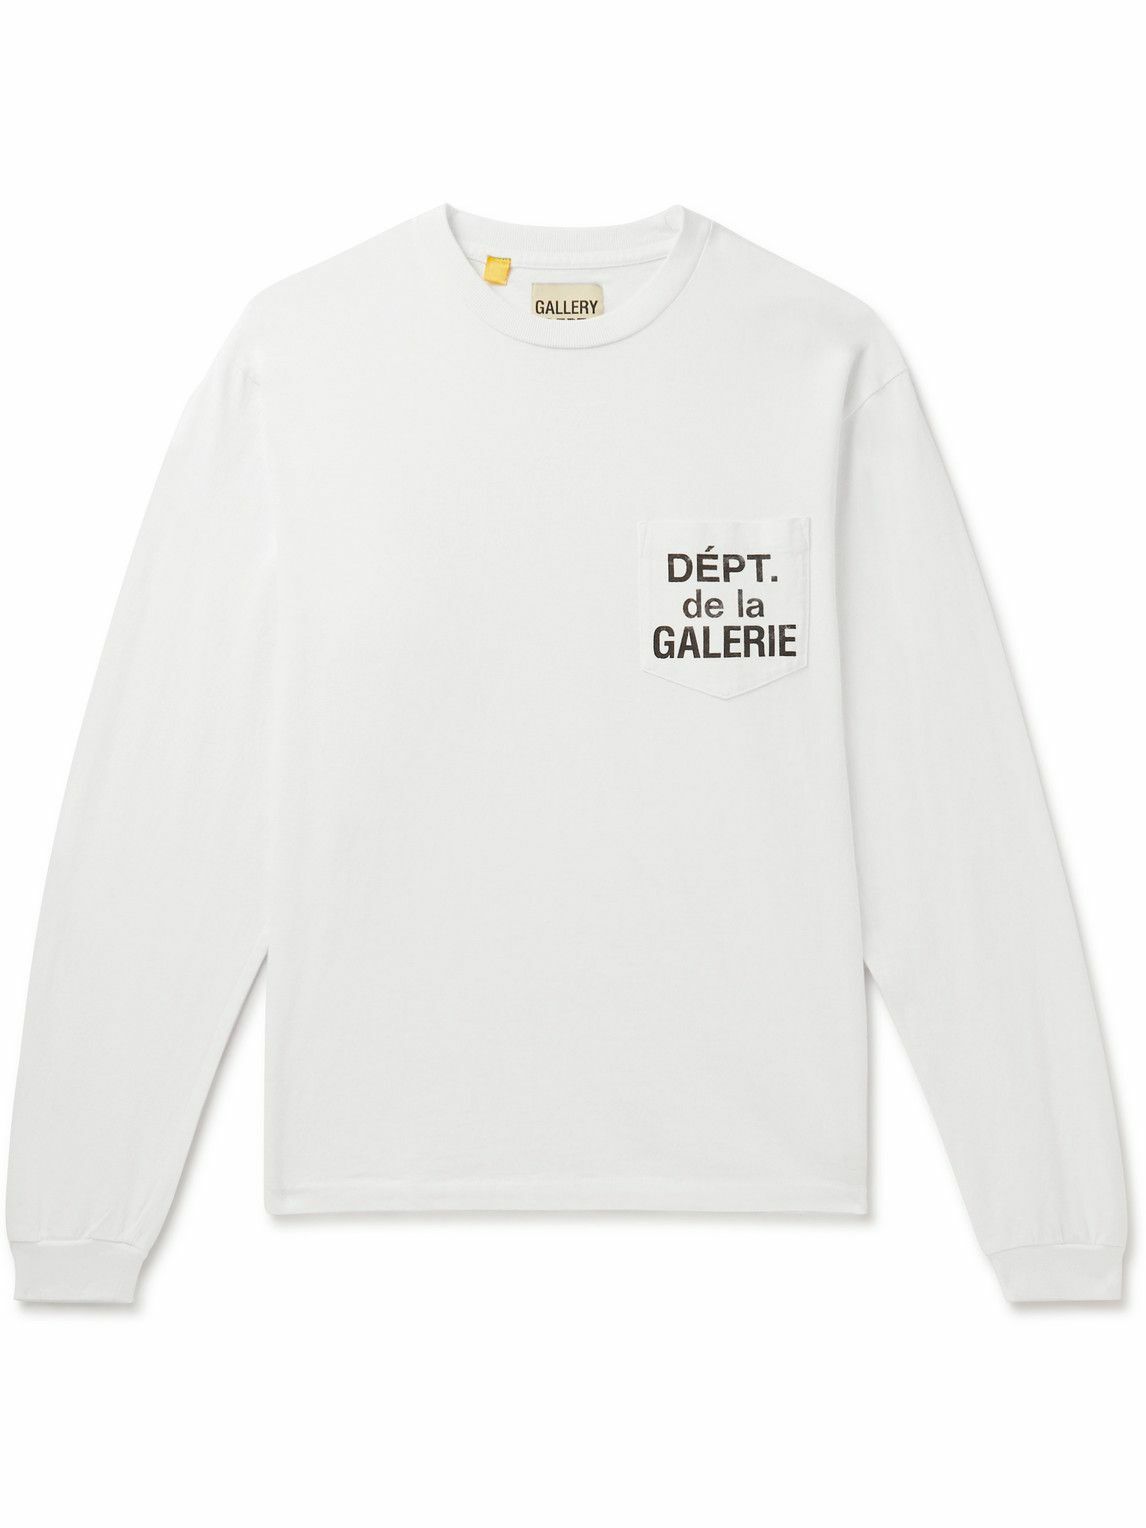 Gallery Dept. - Dept De La Galerie Printed Cotton-Jersey T-Shirt ...